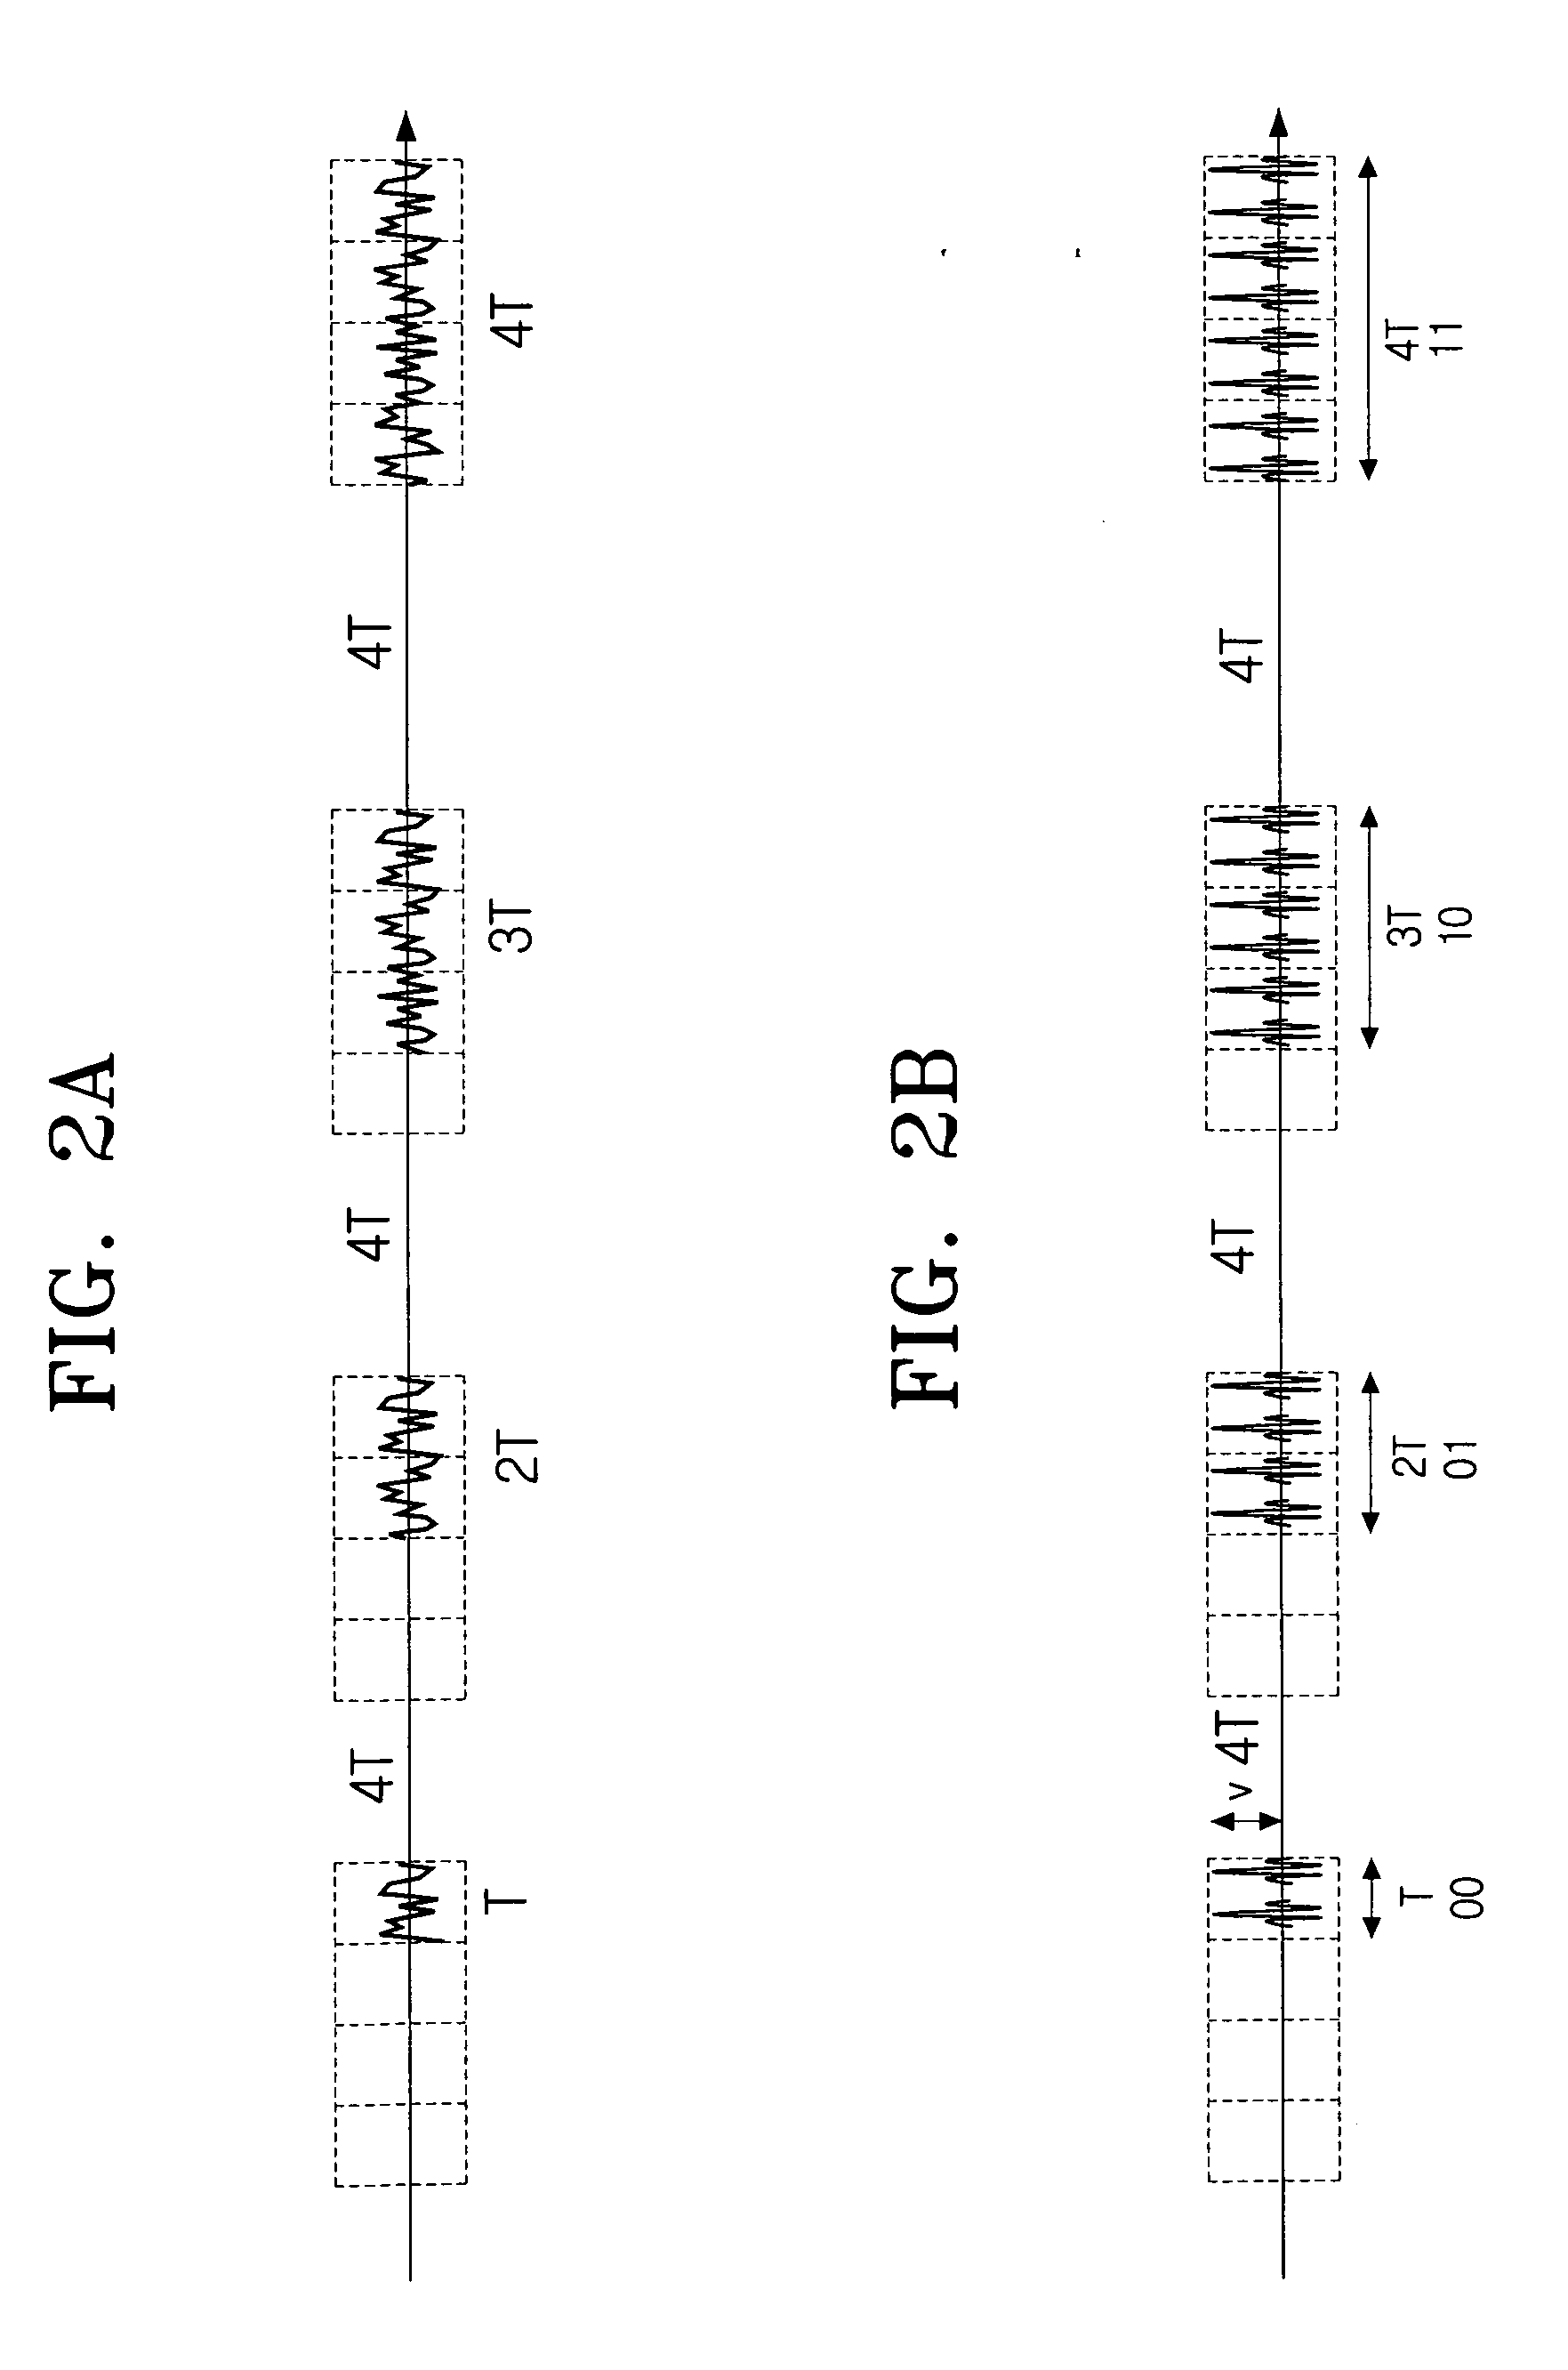 Communication system using length shift keying modulation